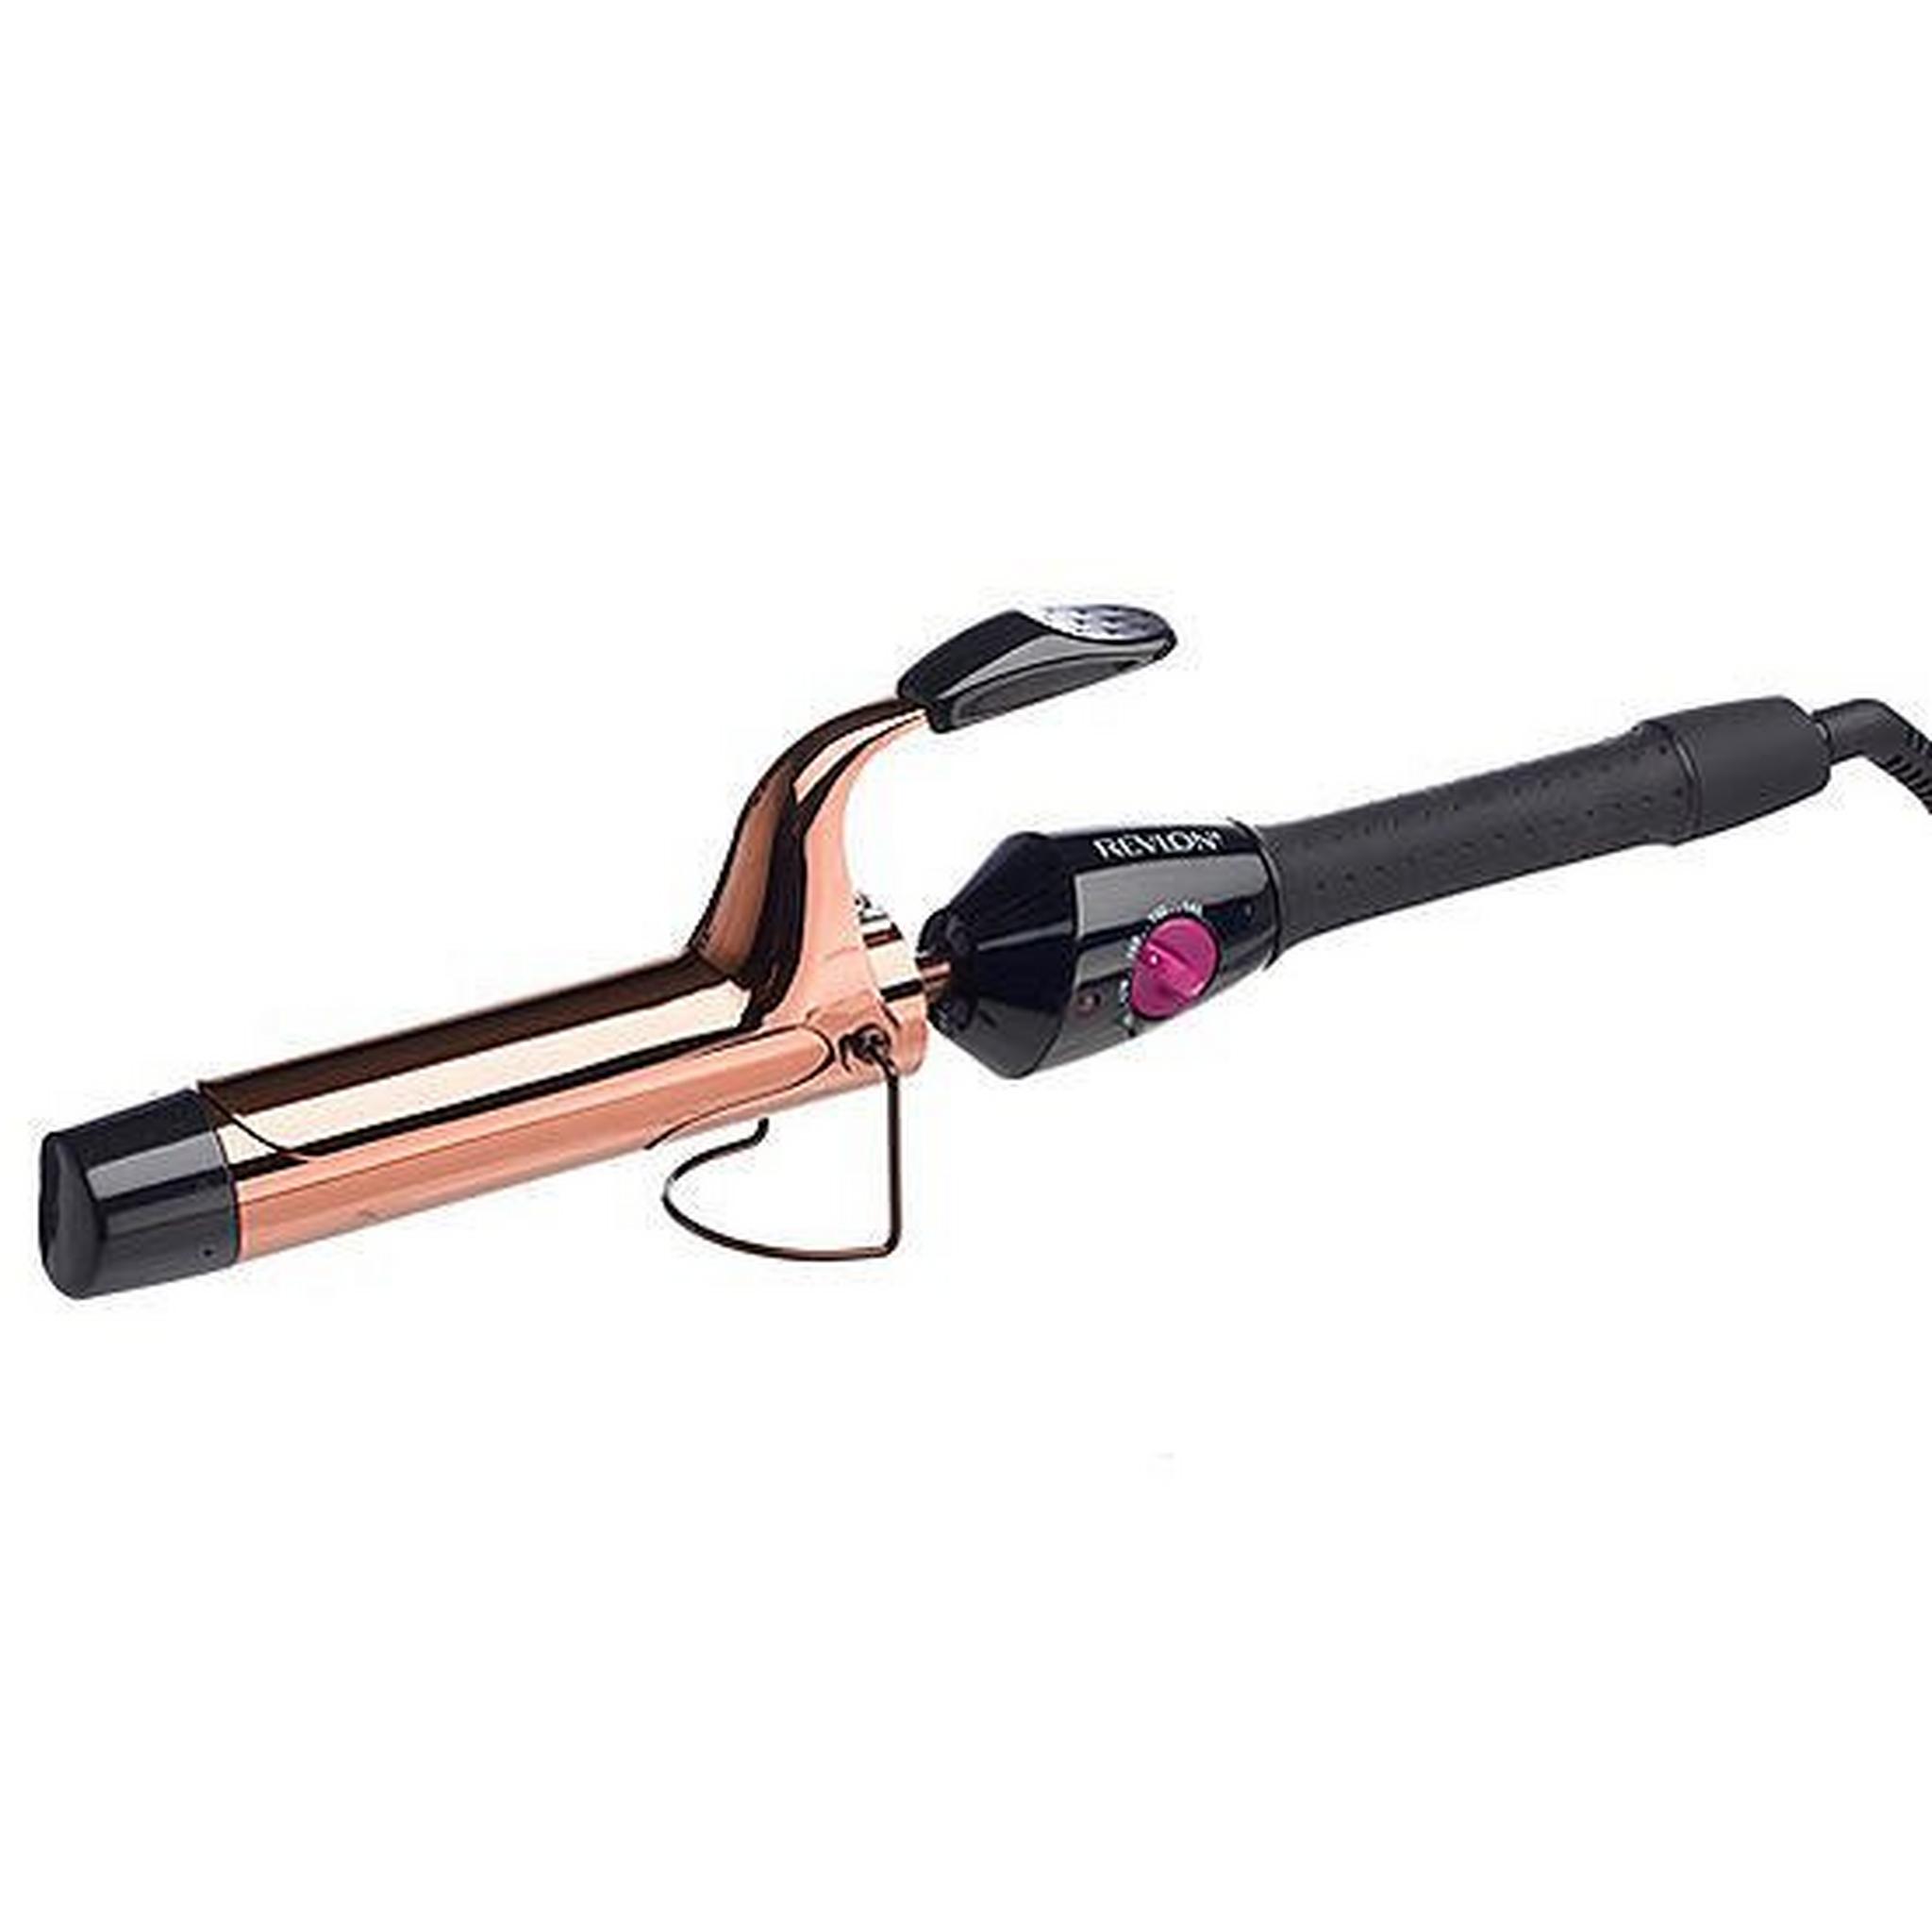 Revlon Pro Salon Curler Waver, 32mm, 20 Heat Settings, RVIR1159 - Copper